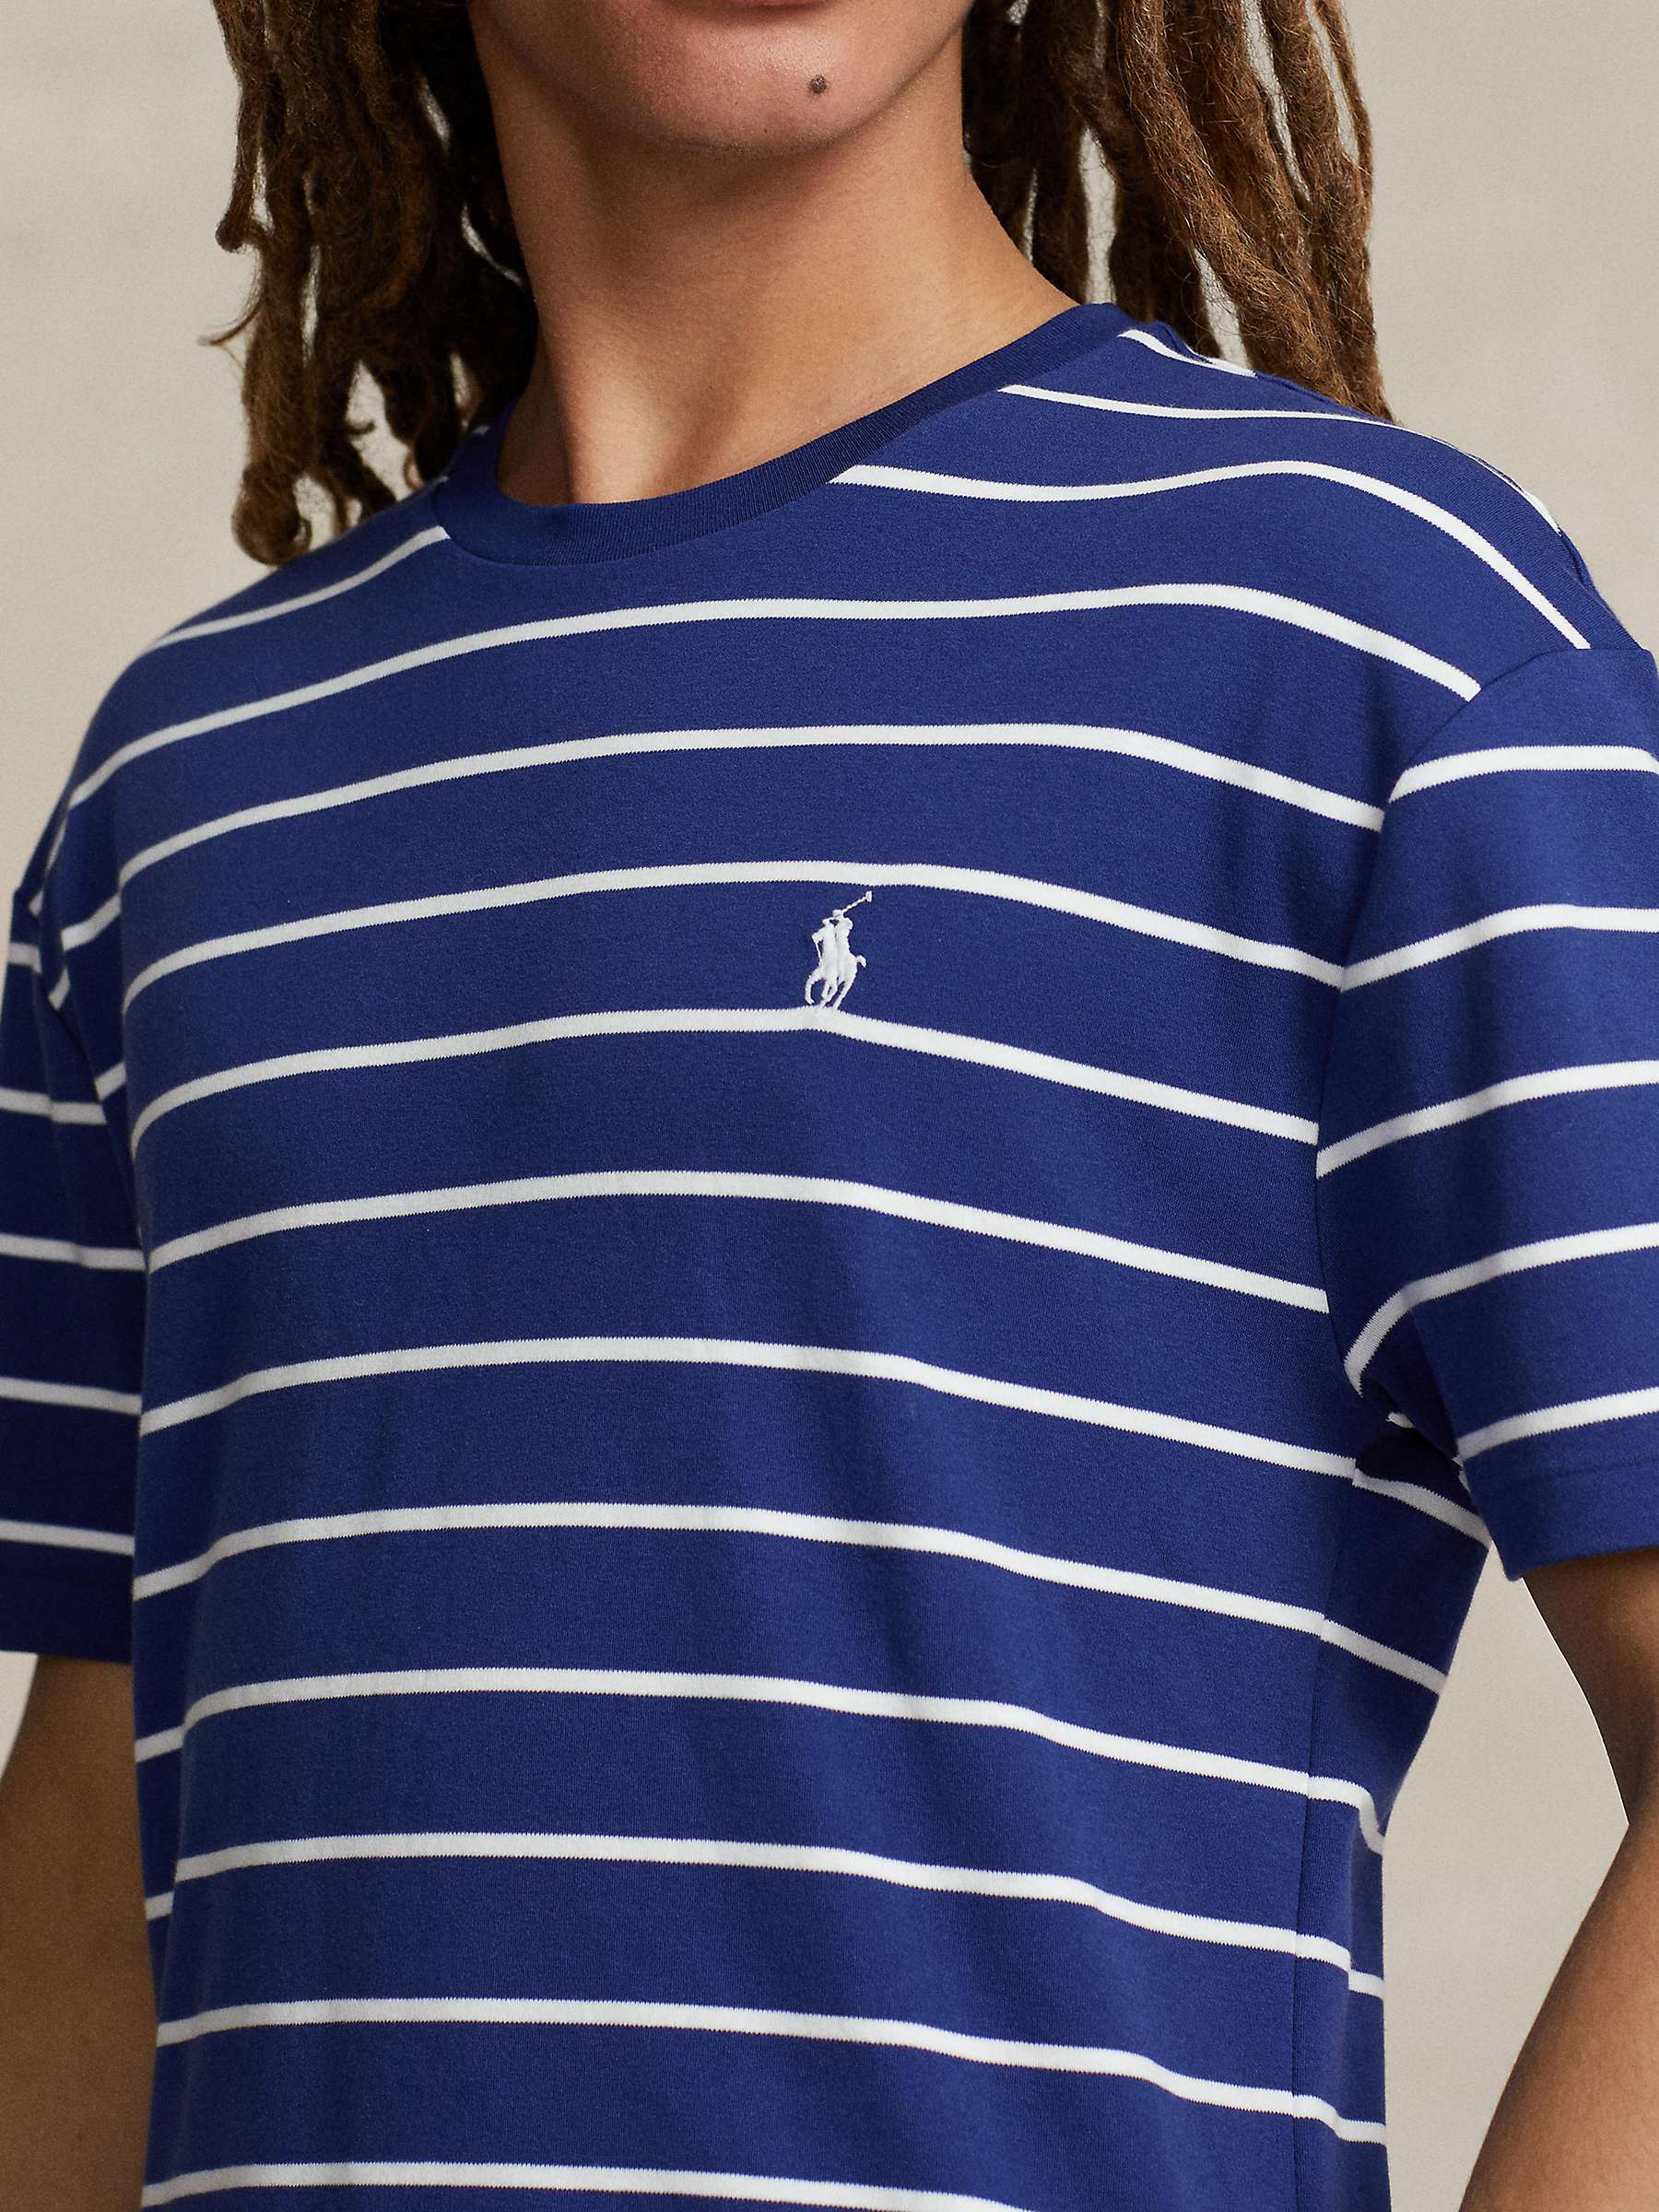 Buy Polo Ralph Lauren Cotton Striped T-Shirt Online at johnlewis.com